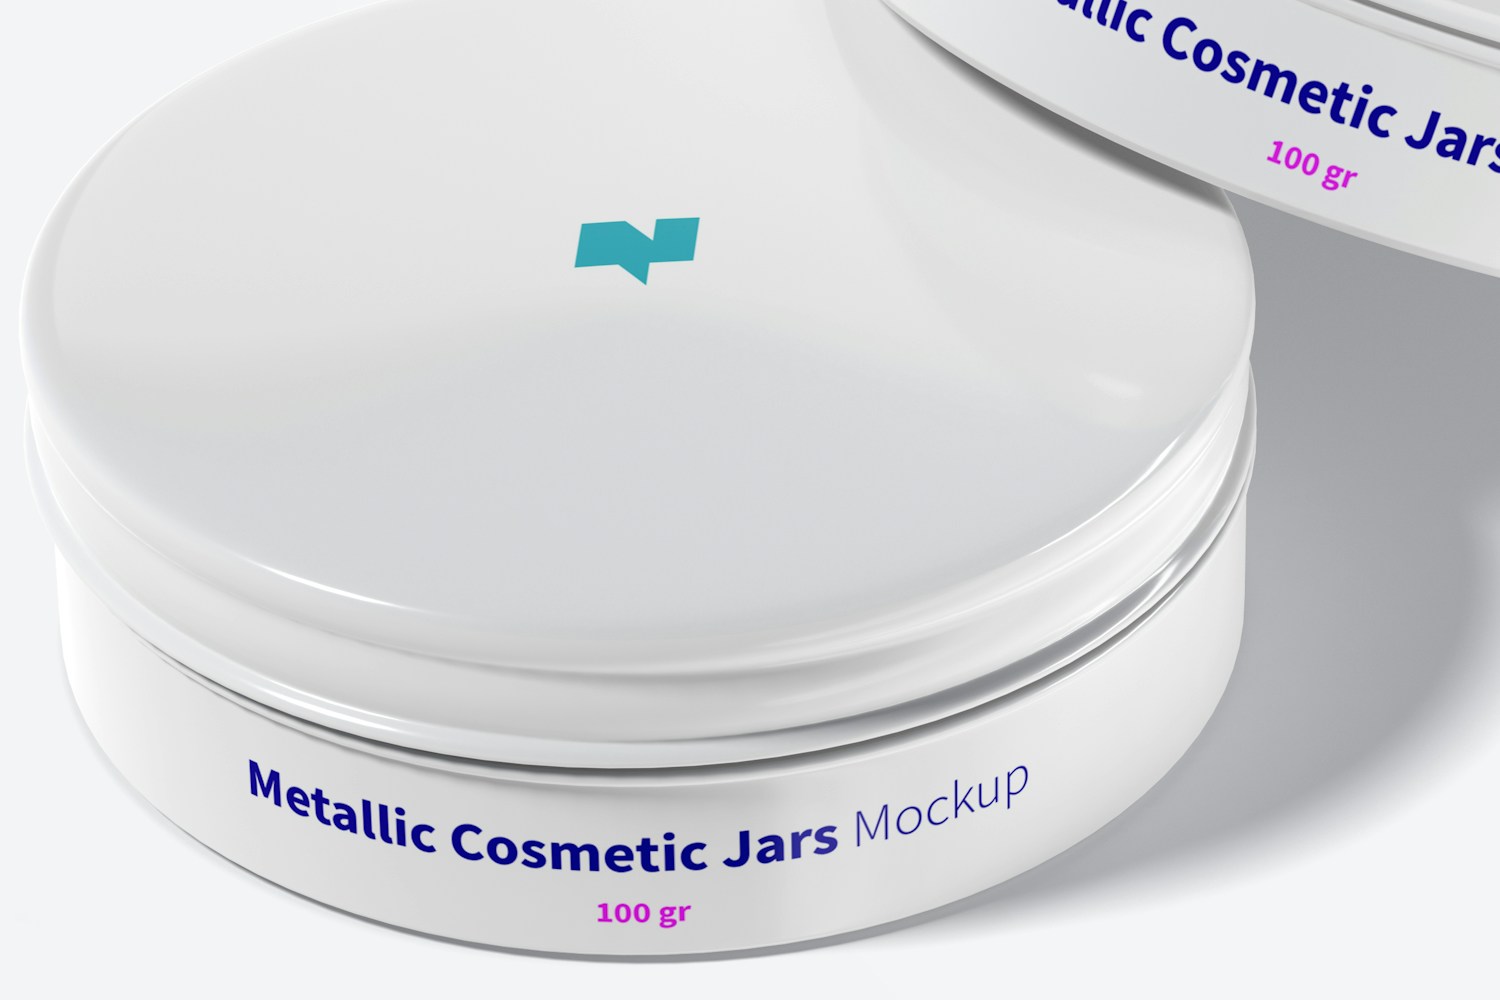 100g Metallic Cosmetic Jars Mockup, Top View